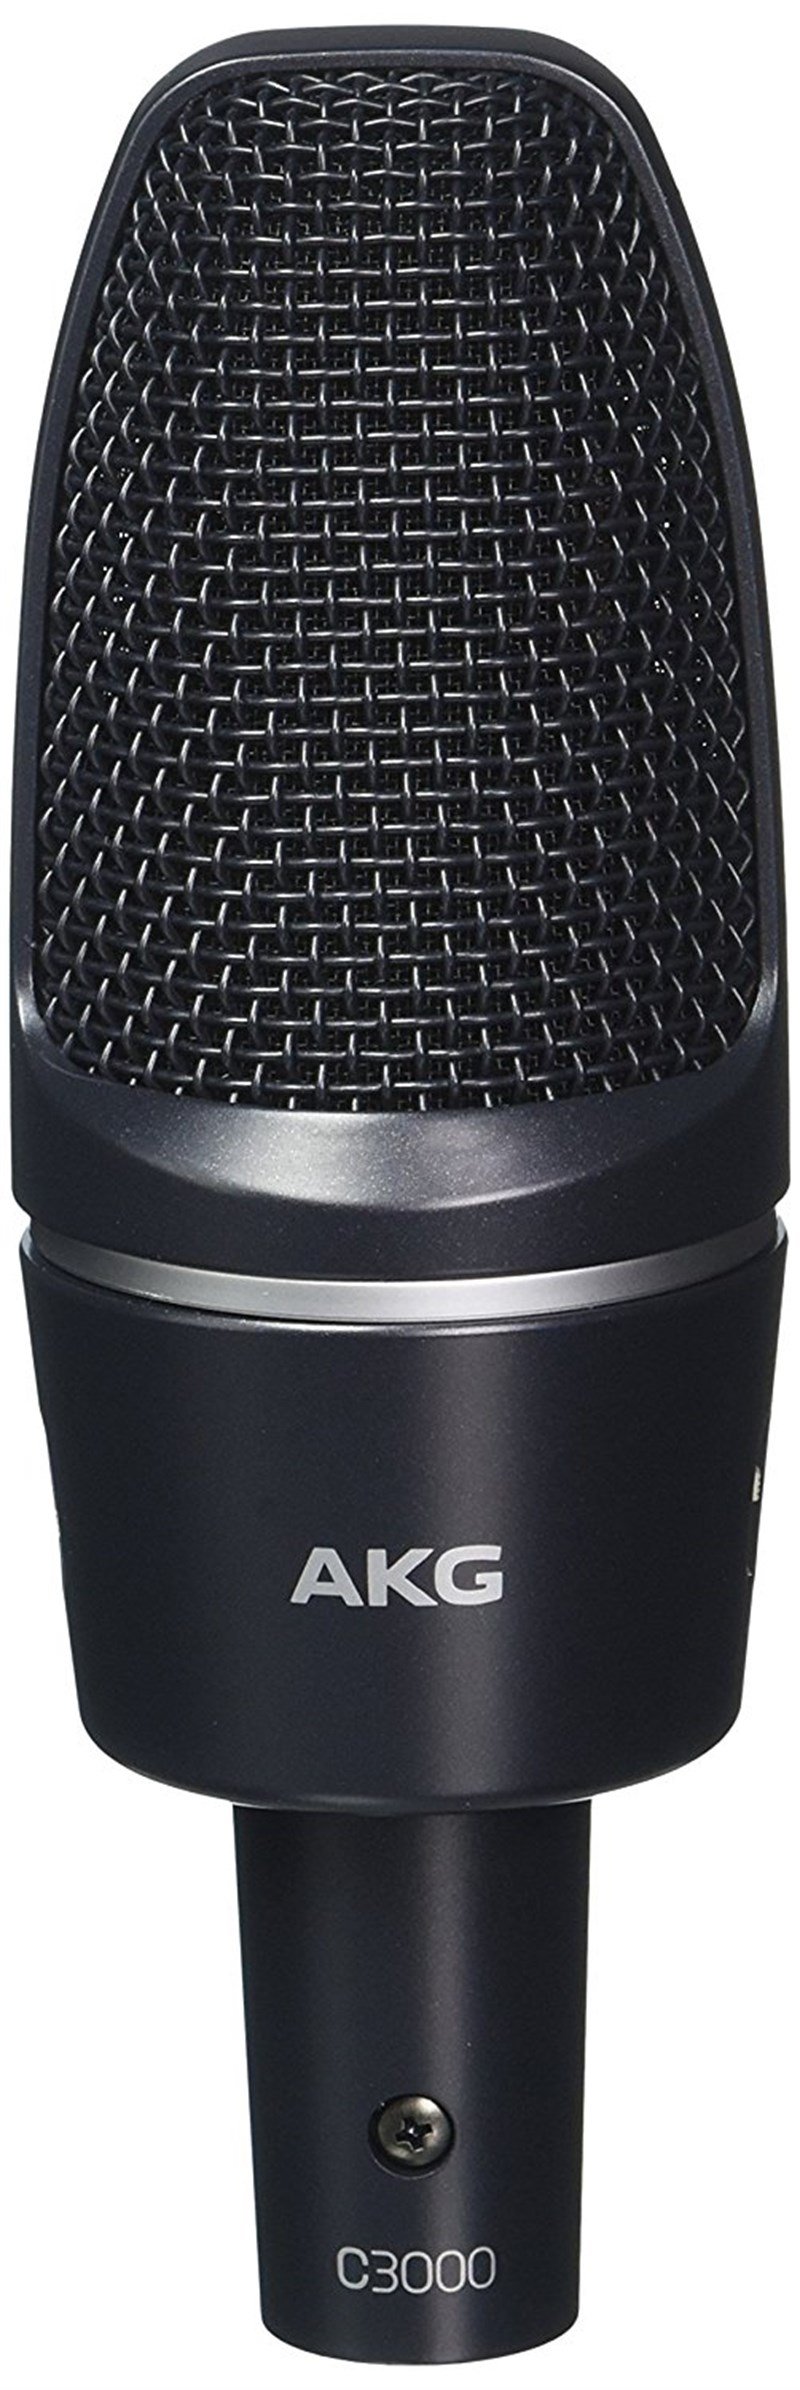 Akg C3000 Kondenser Vokal ve Enstrüman Mikrofonu